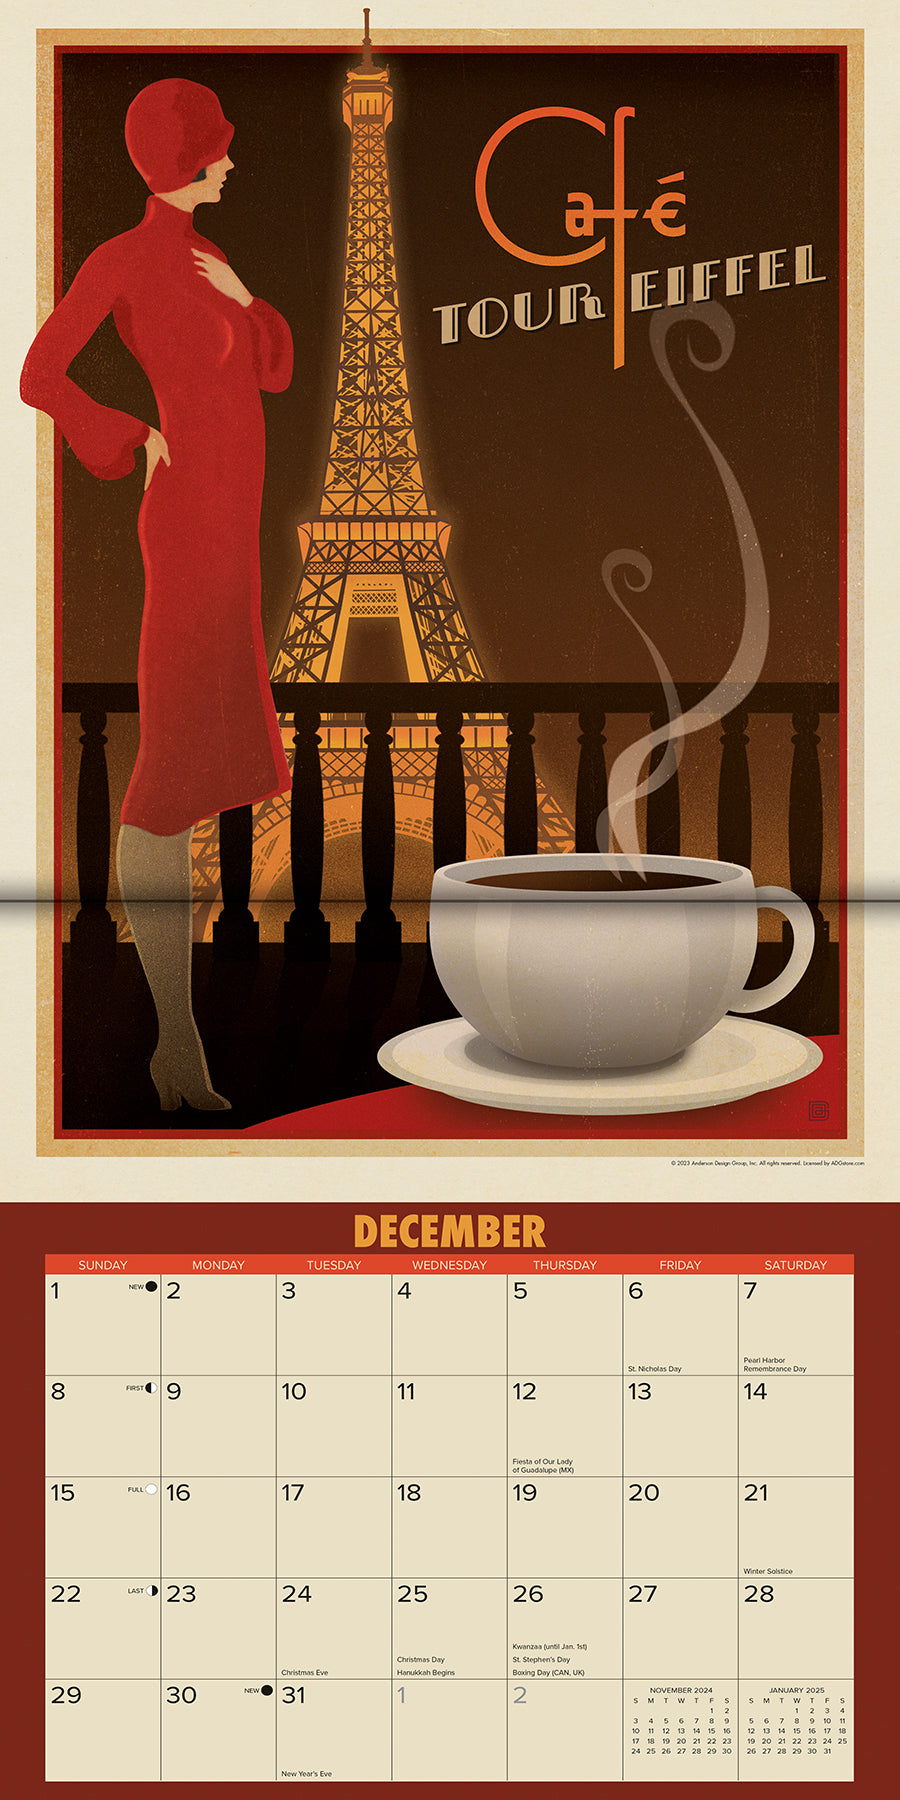 2024 Coffee Delights - Wall Calendar